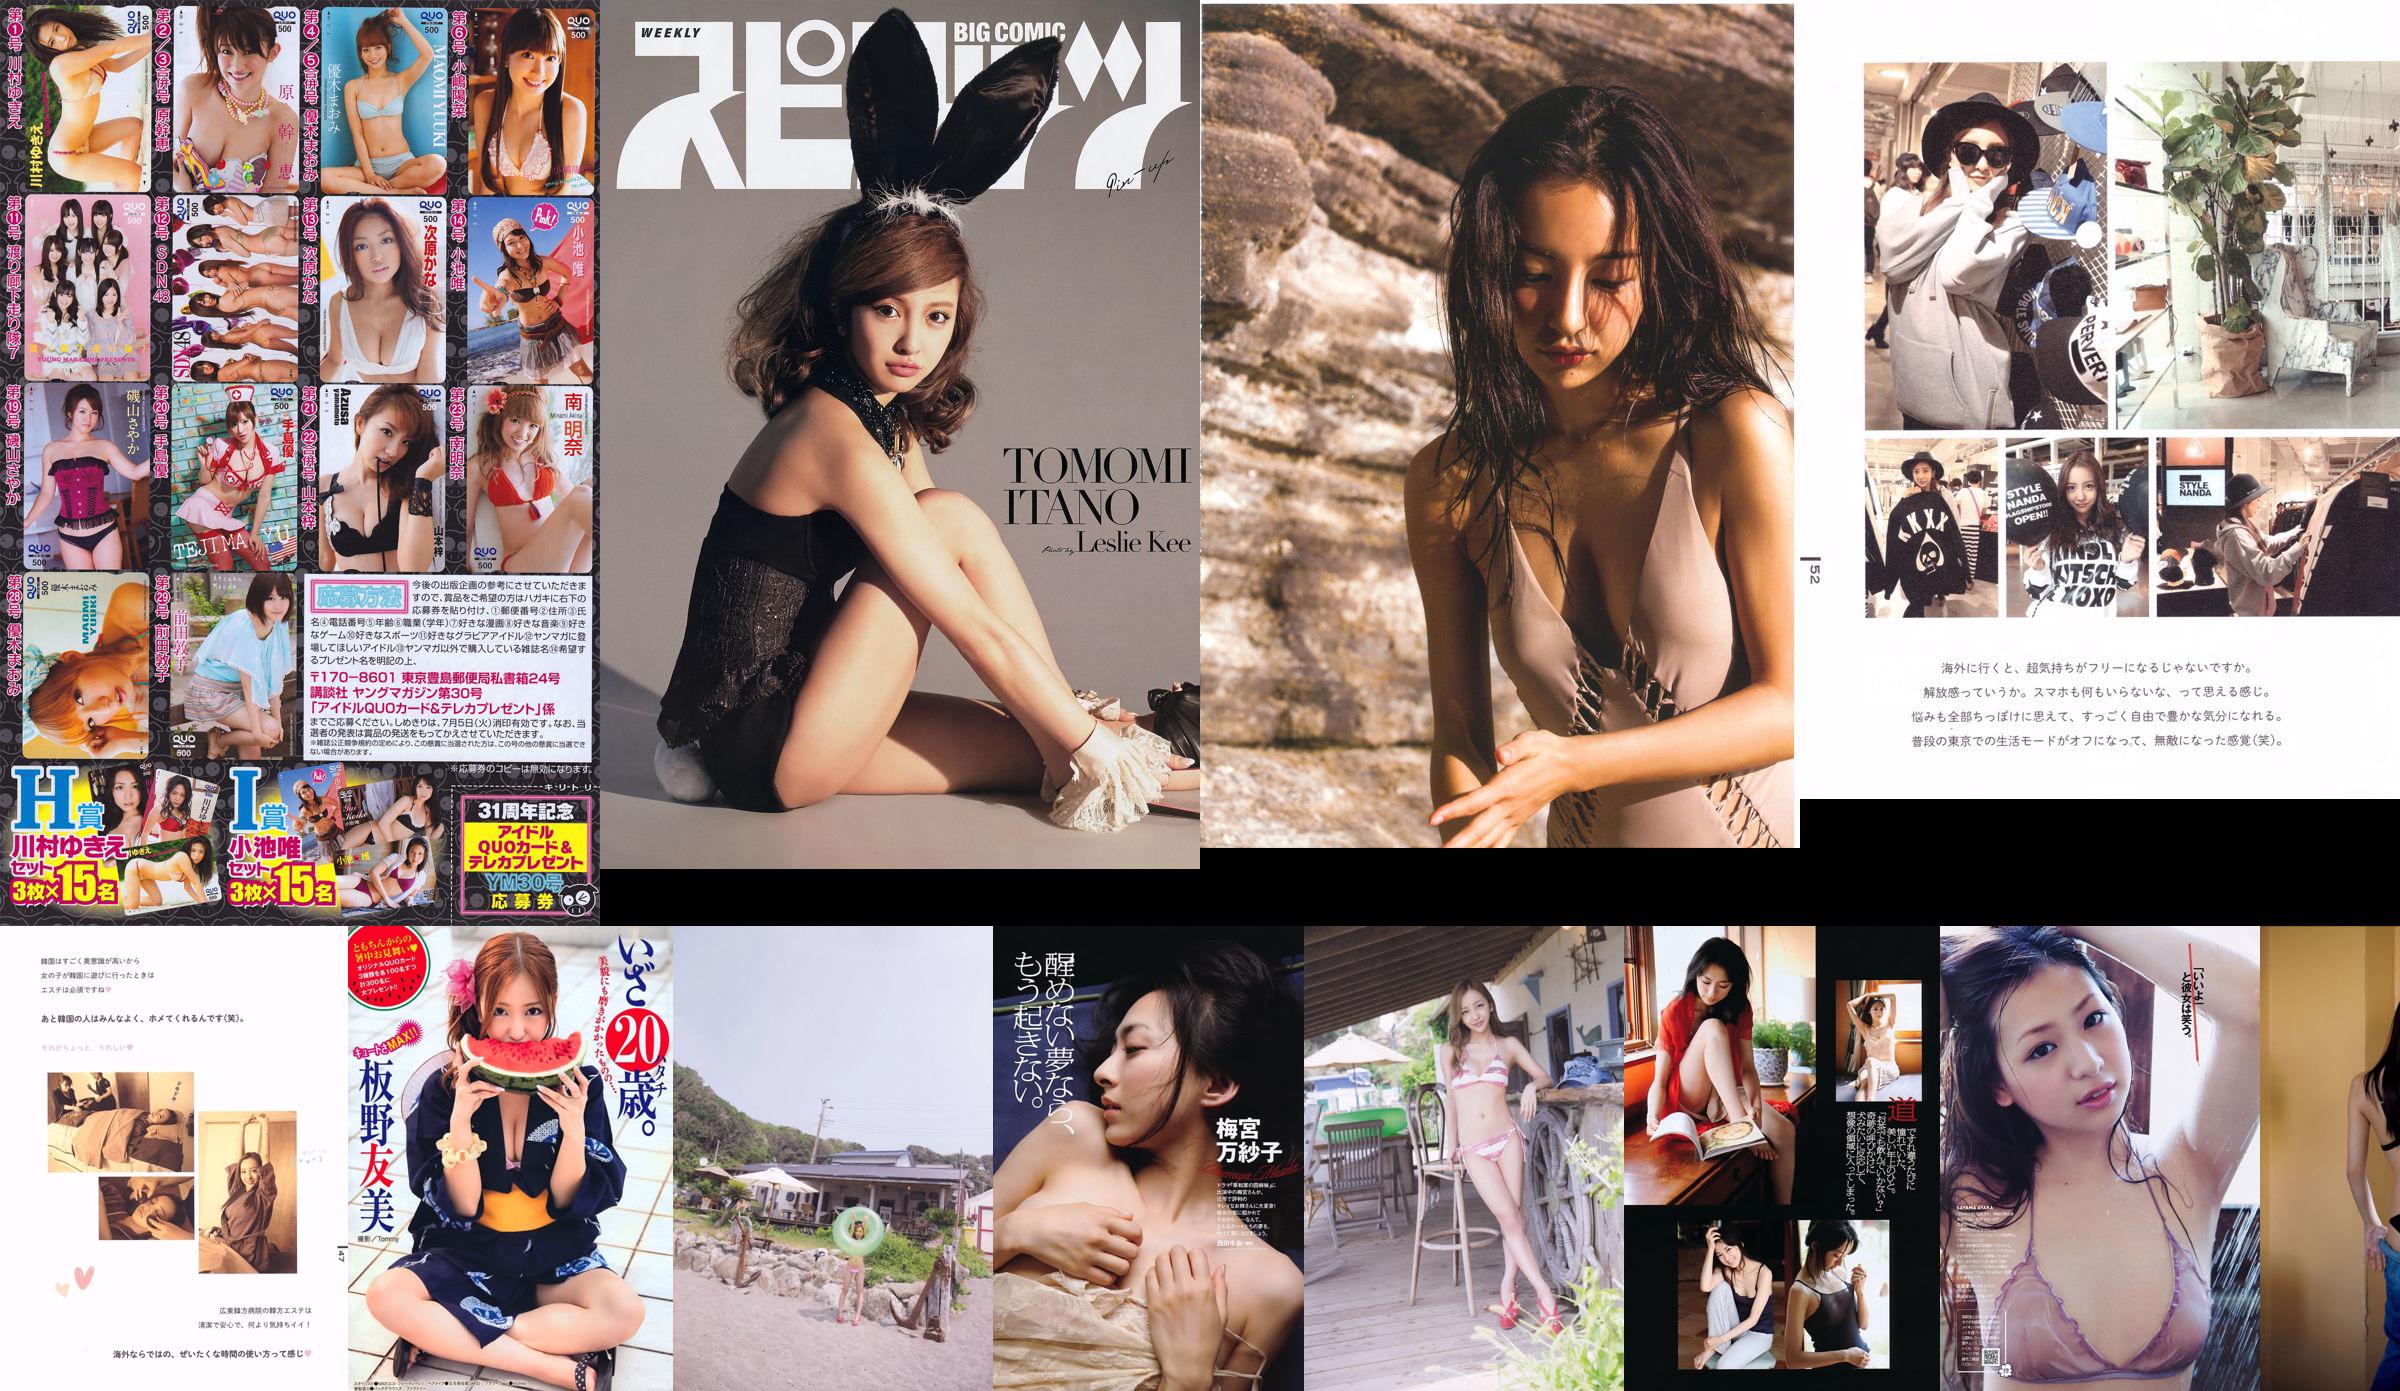 [Young Magazine] 板野友美 Tomomi Itano 2011年No.36-37 写真杂志 No.2c726b 第1頁